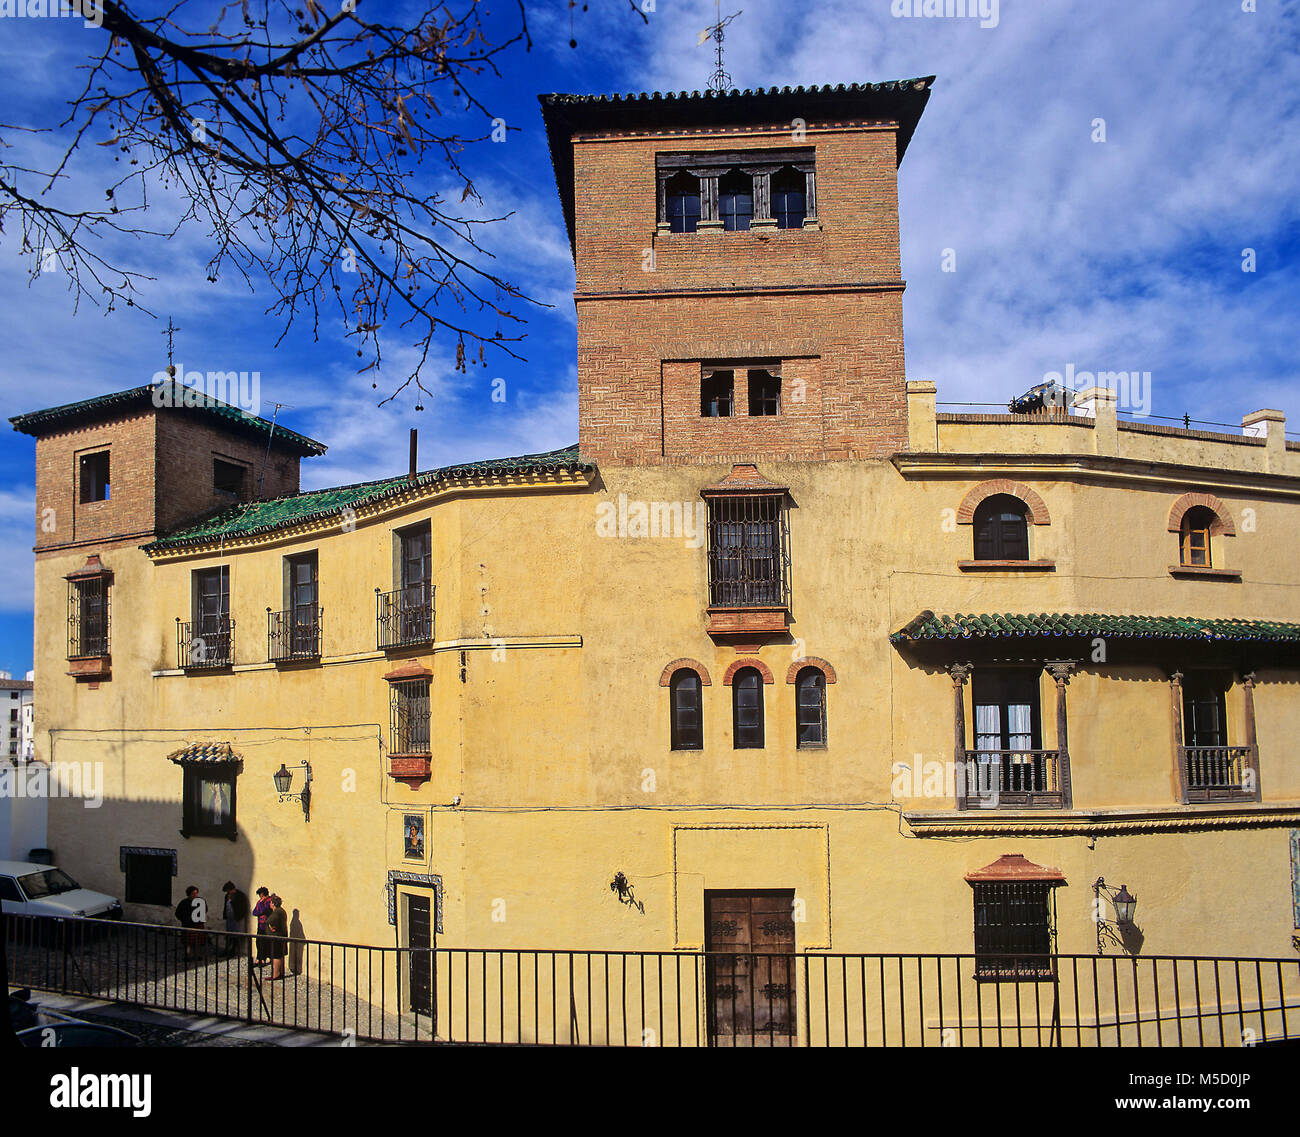 The House of Moorish King - facade, Ronda, Malaga province, Region of Andalusia, Spain, Europe Stock Photo